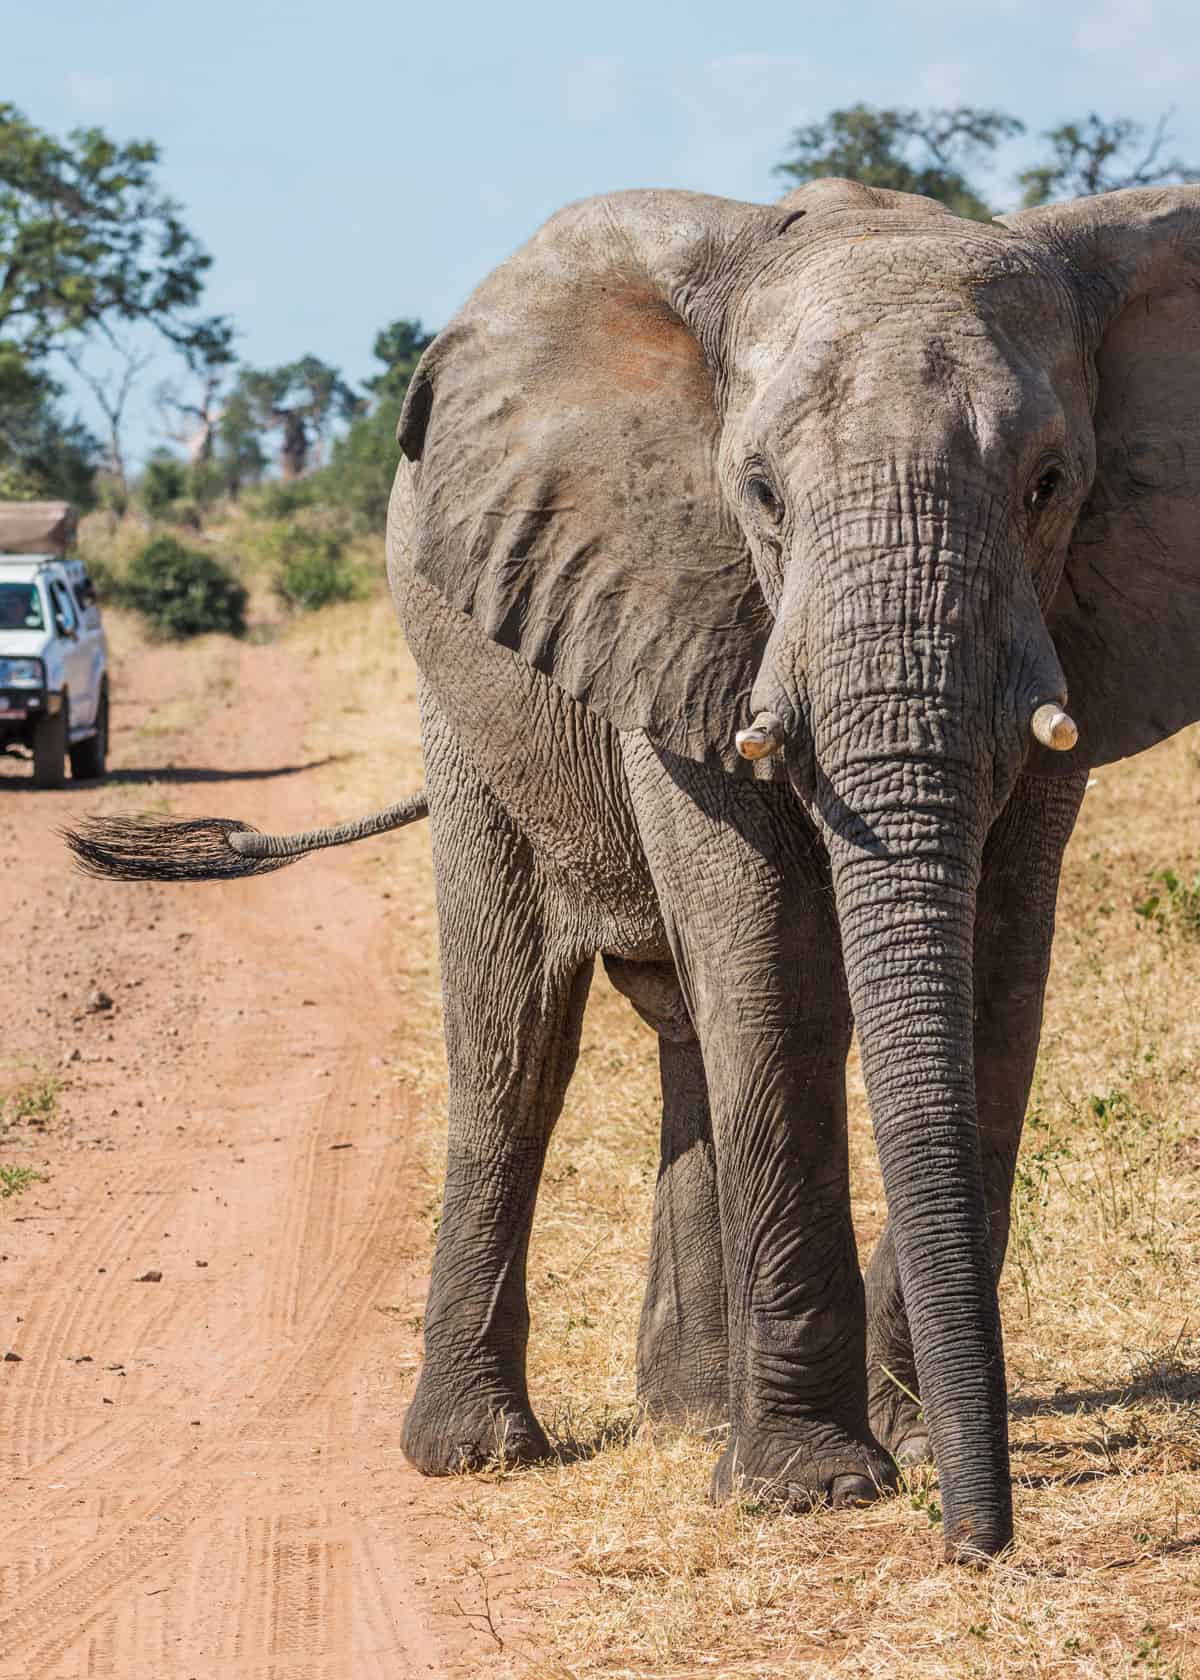 Shooting on an African safari